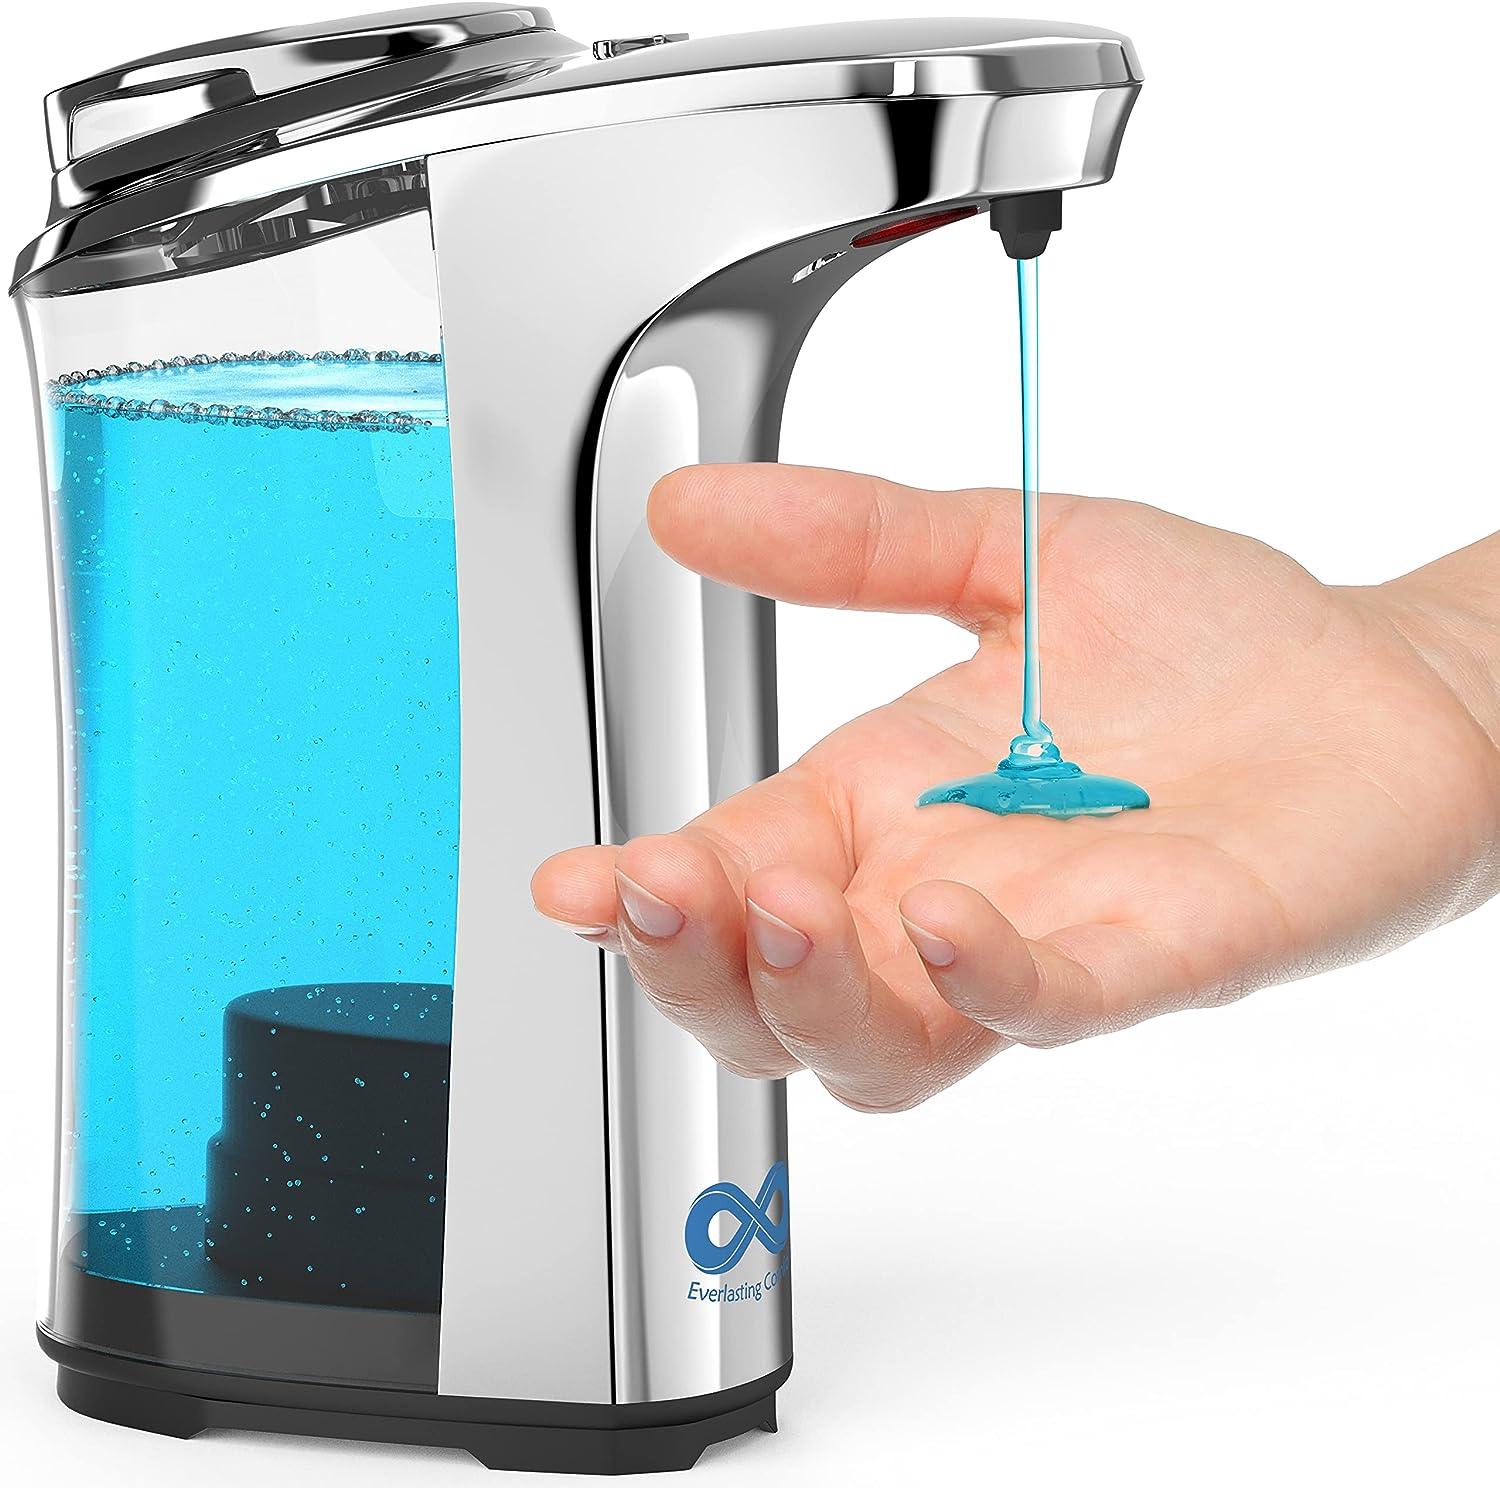 Dispensador de jabón automático fácil de usar lávate las manos 1400 x -  VIRTUAL MUEBLES